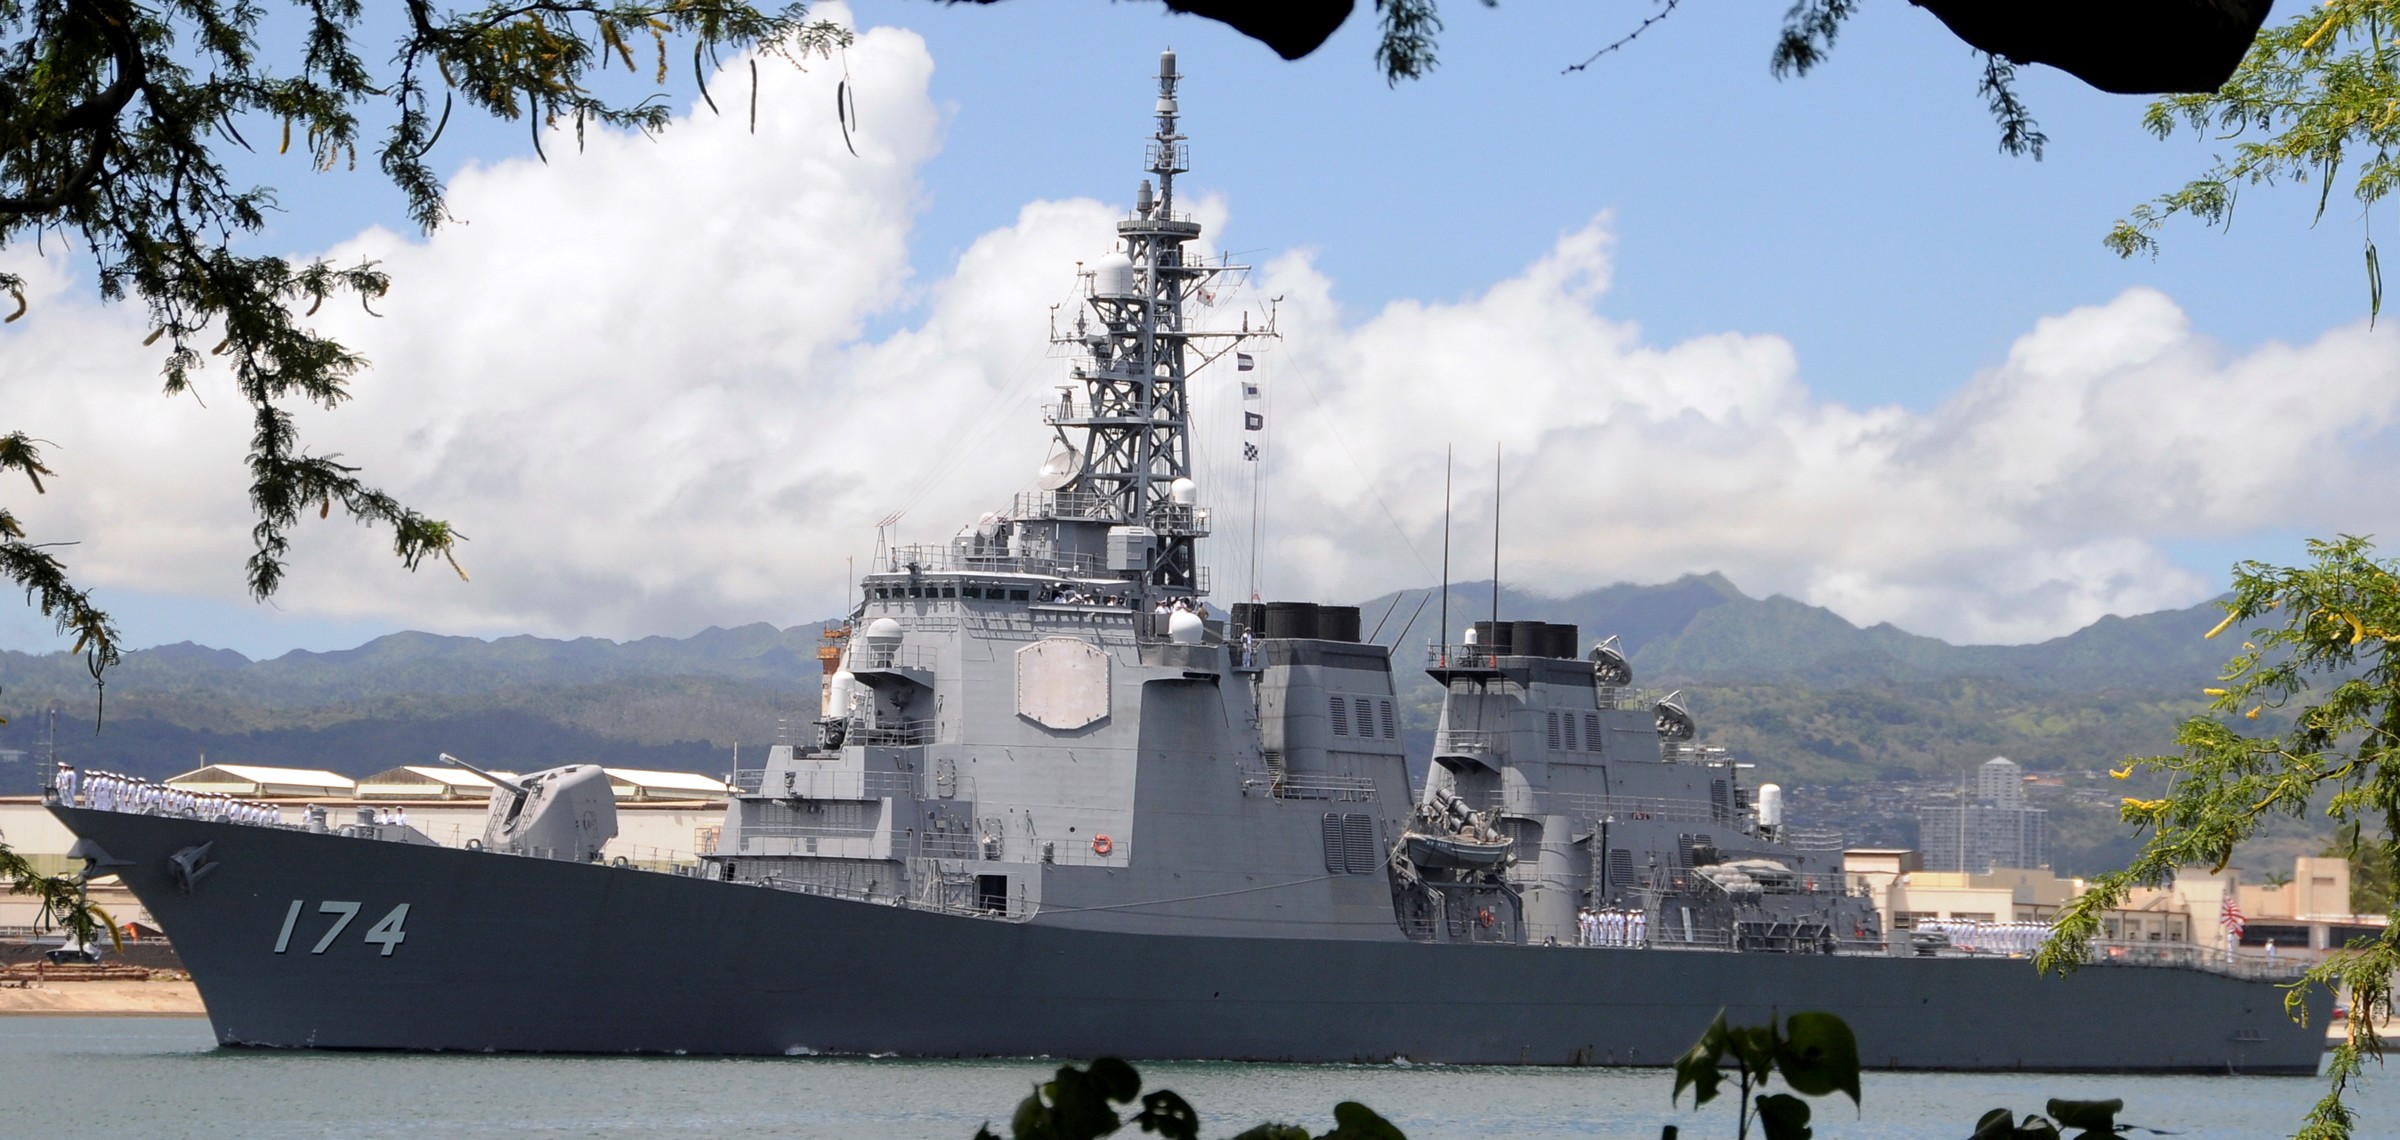 ddg-174 js kirishima kongo class guided missile destroyer aegis japan maritime self defense force jmsdf 22